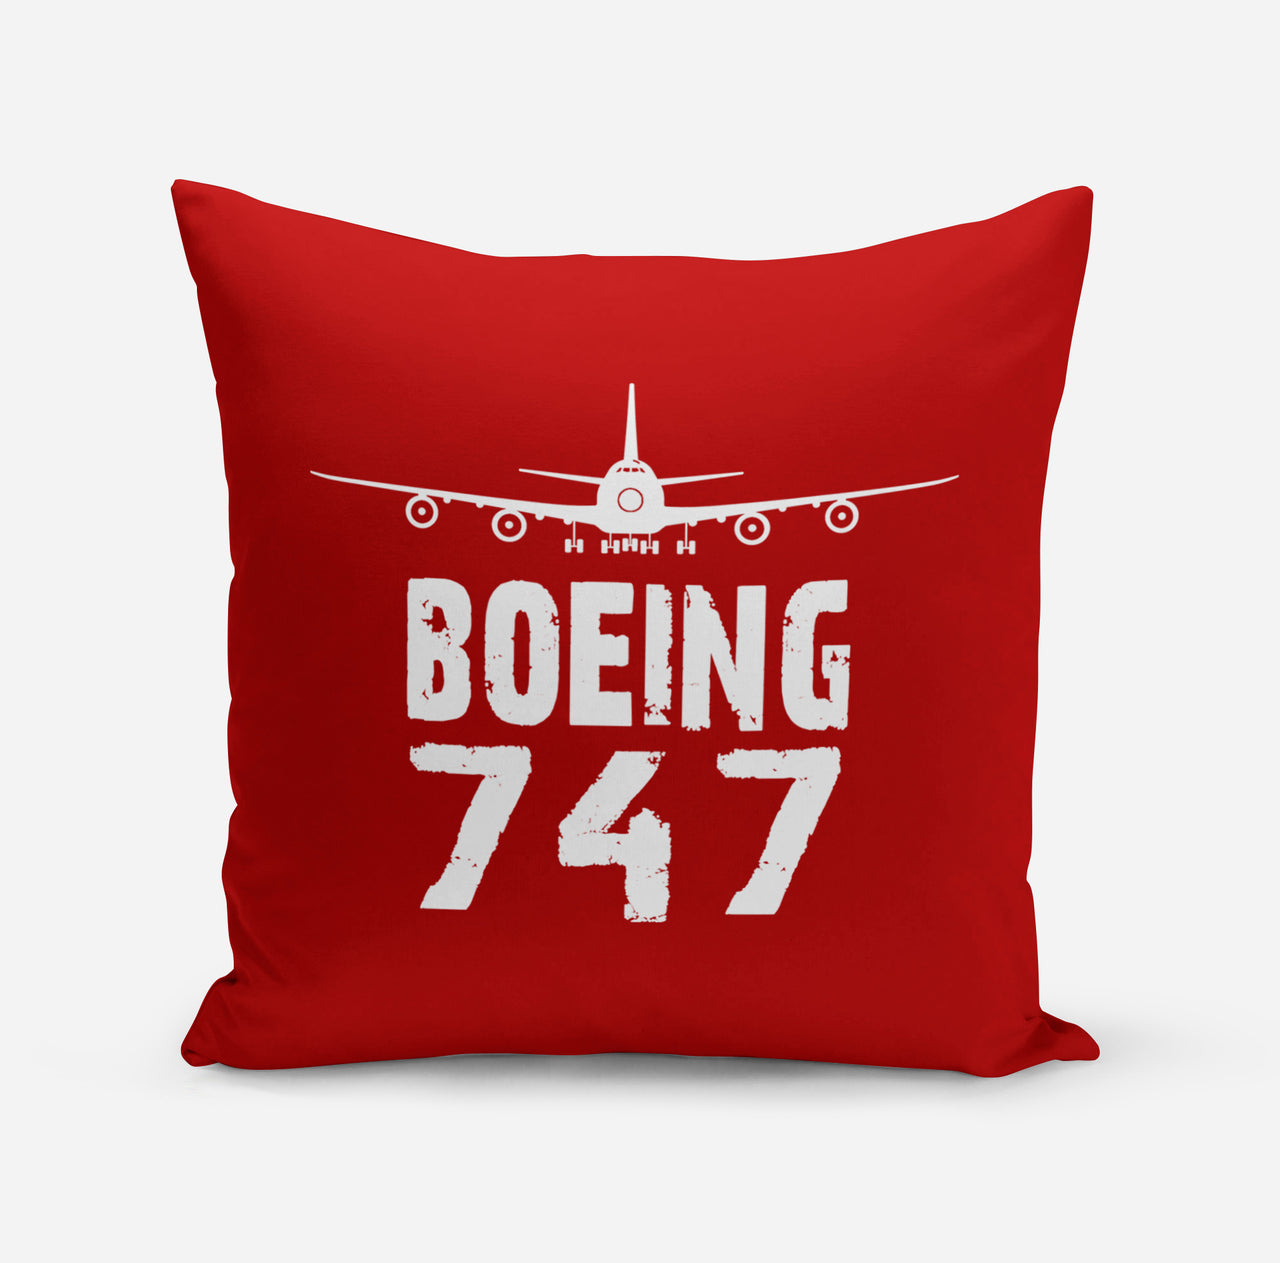 Boeing 747 & Plane Designed Pillows